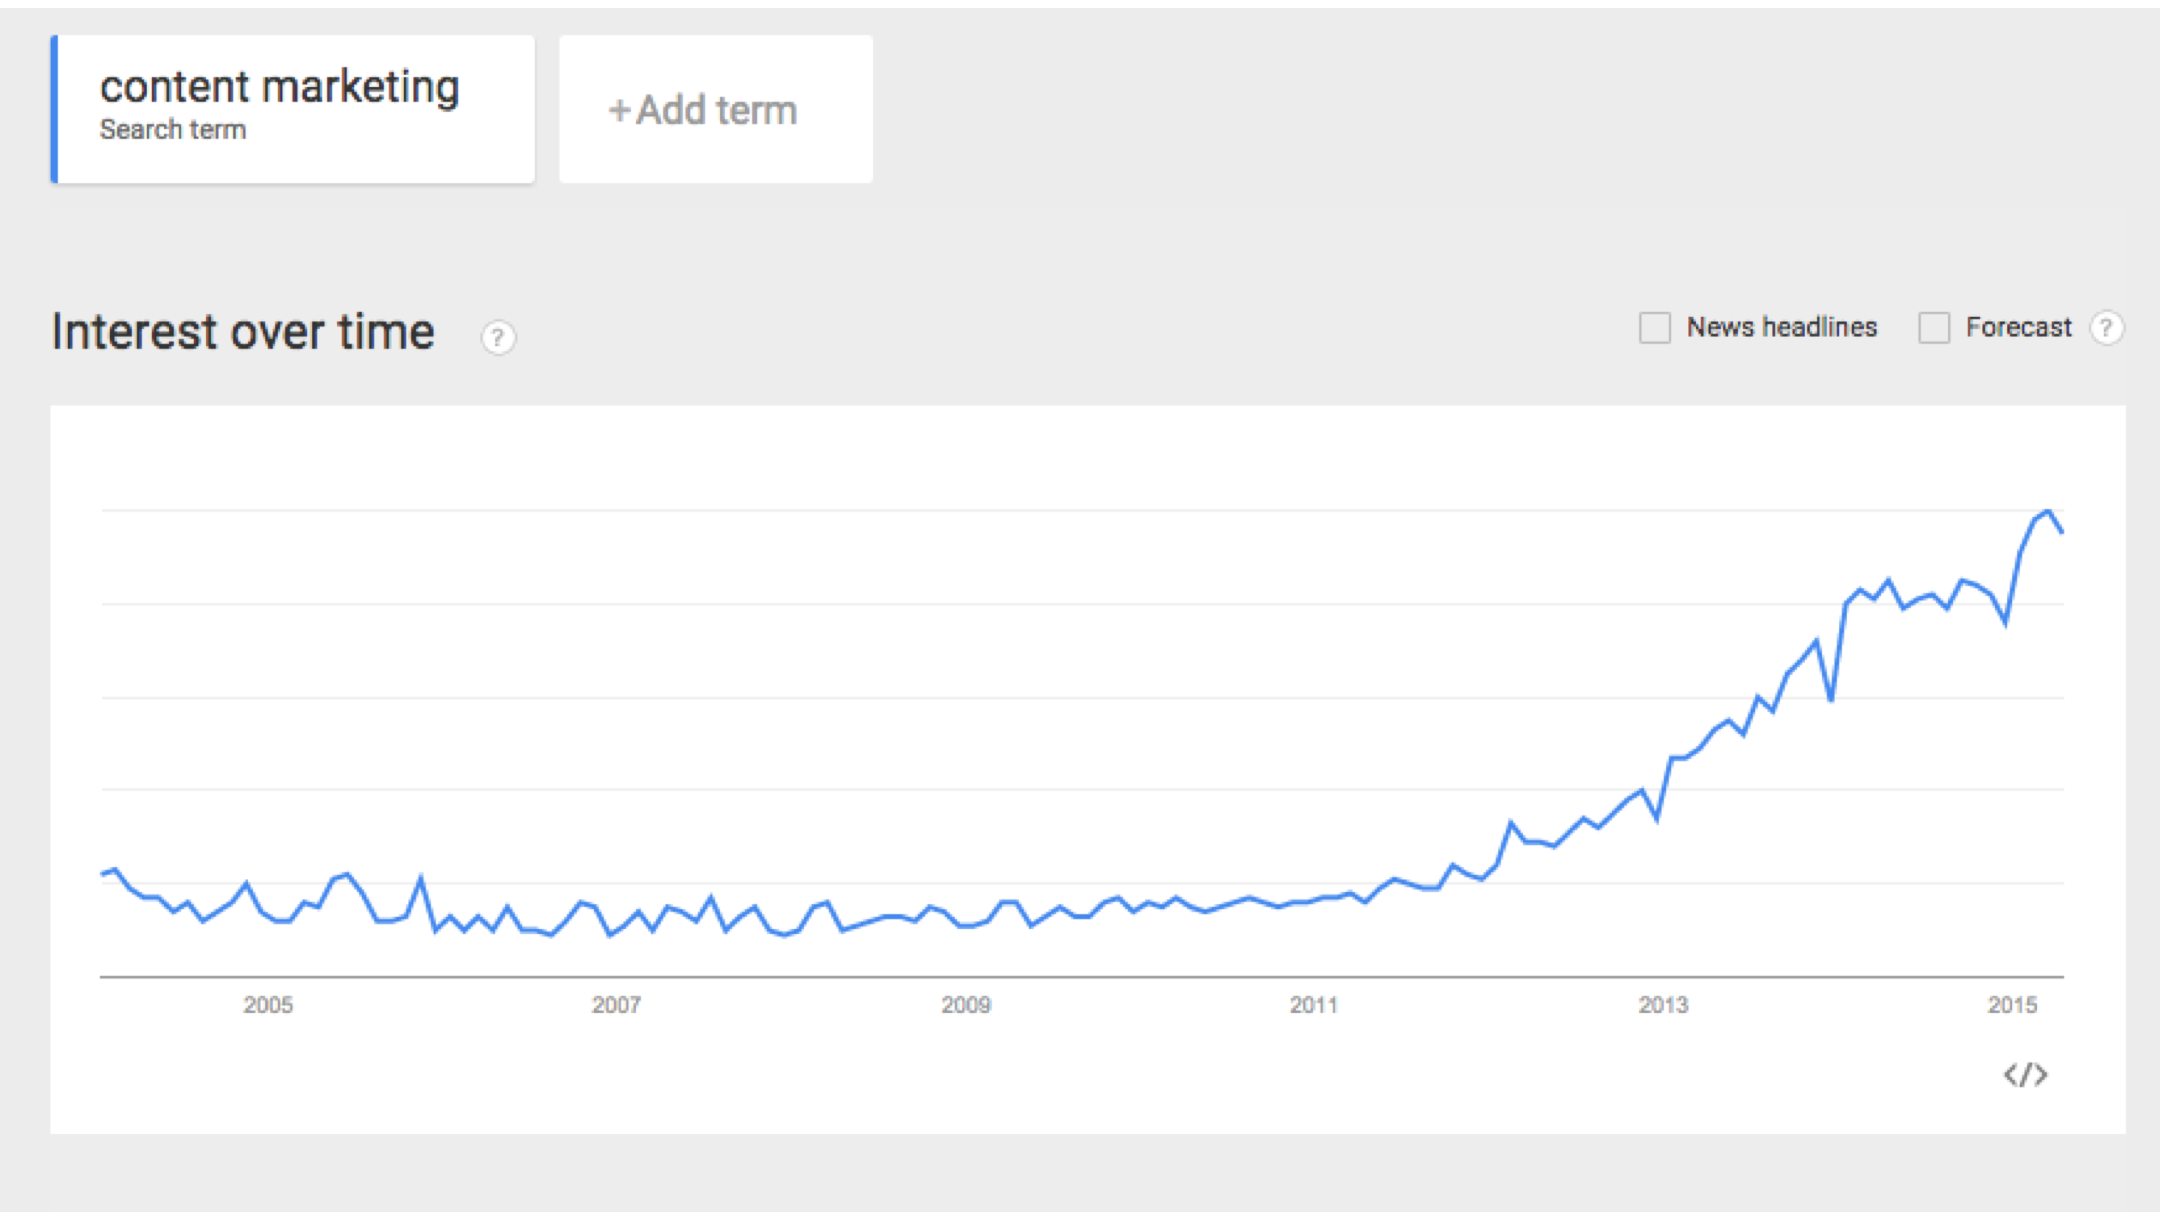 contenet marketing Google trends